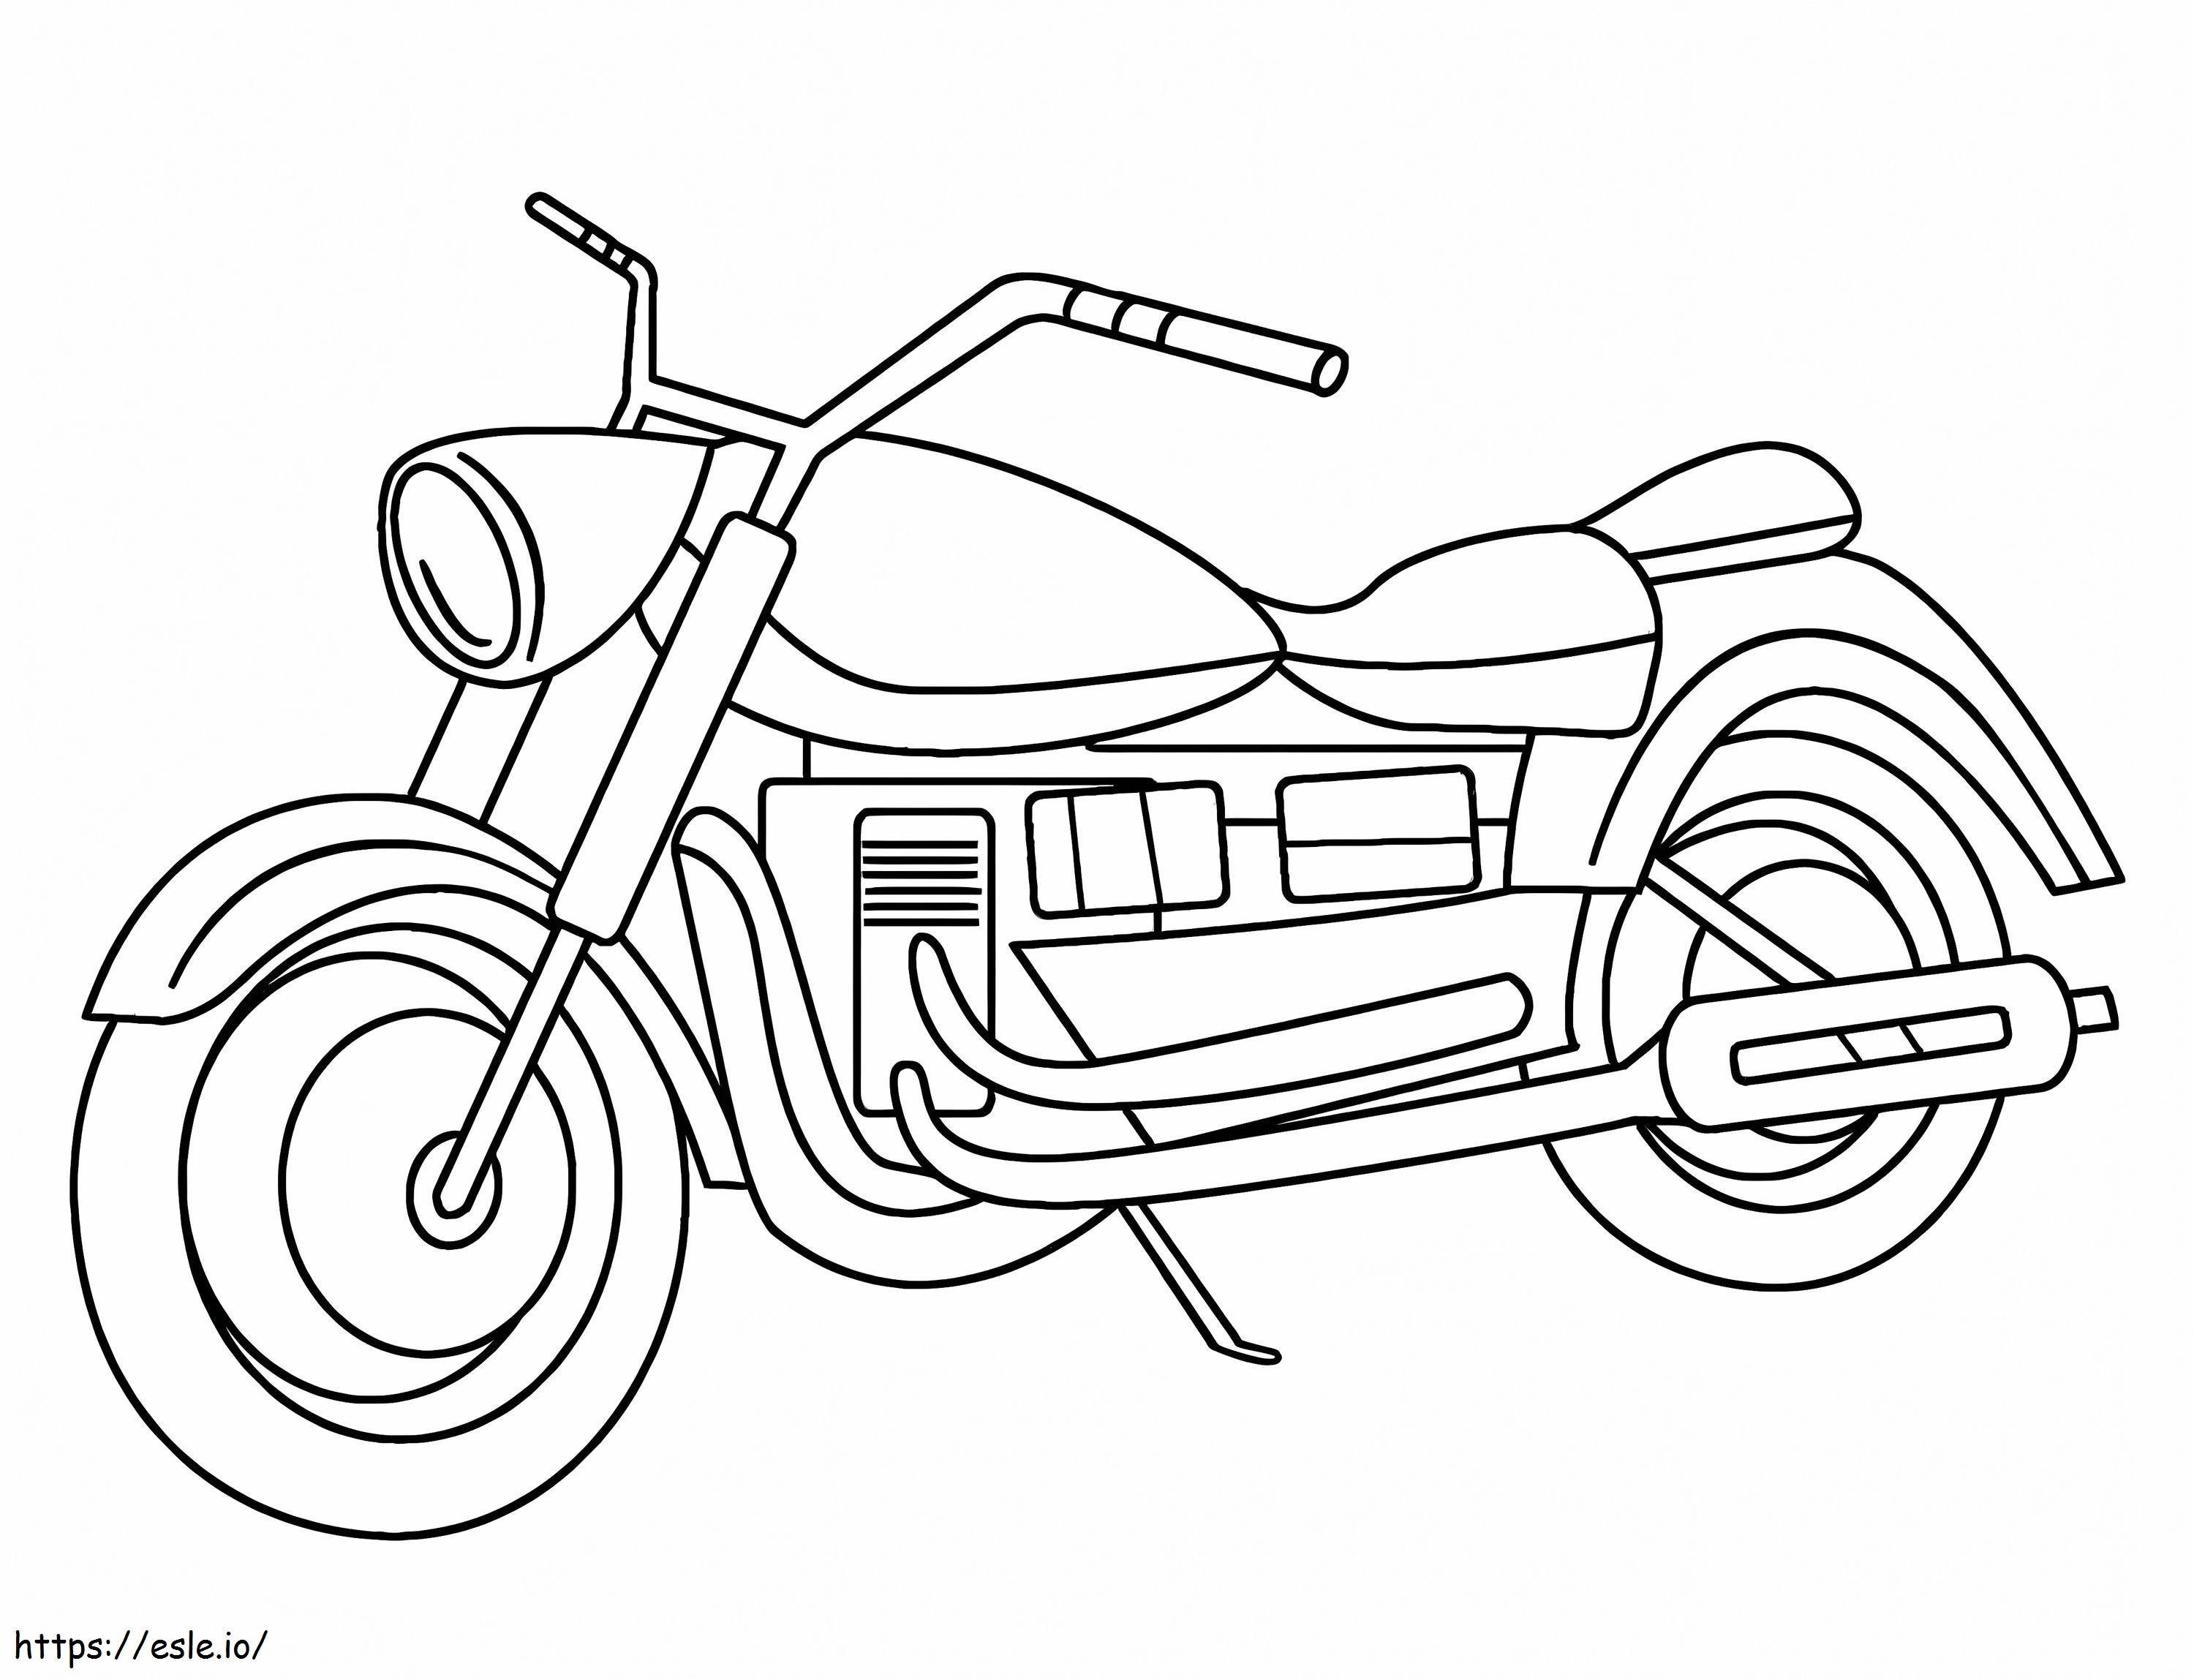 Motocykl 6 kolorowanka